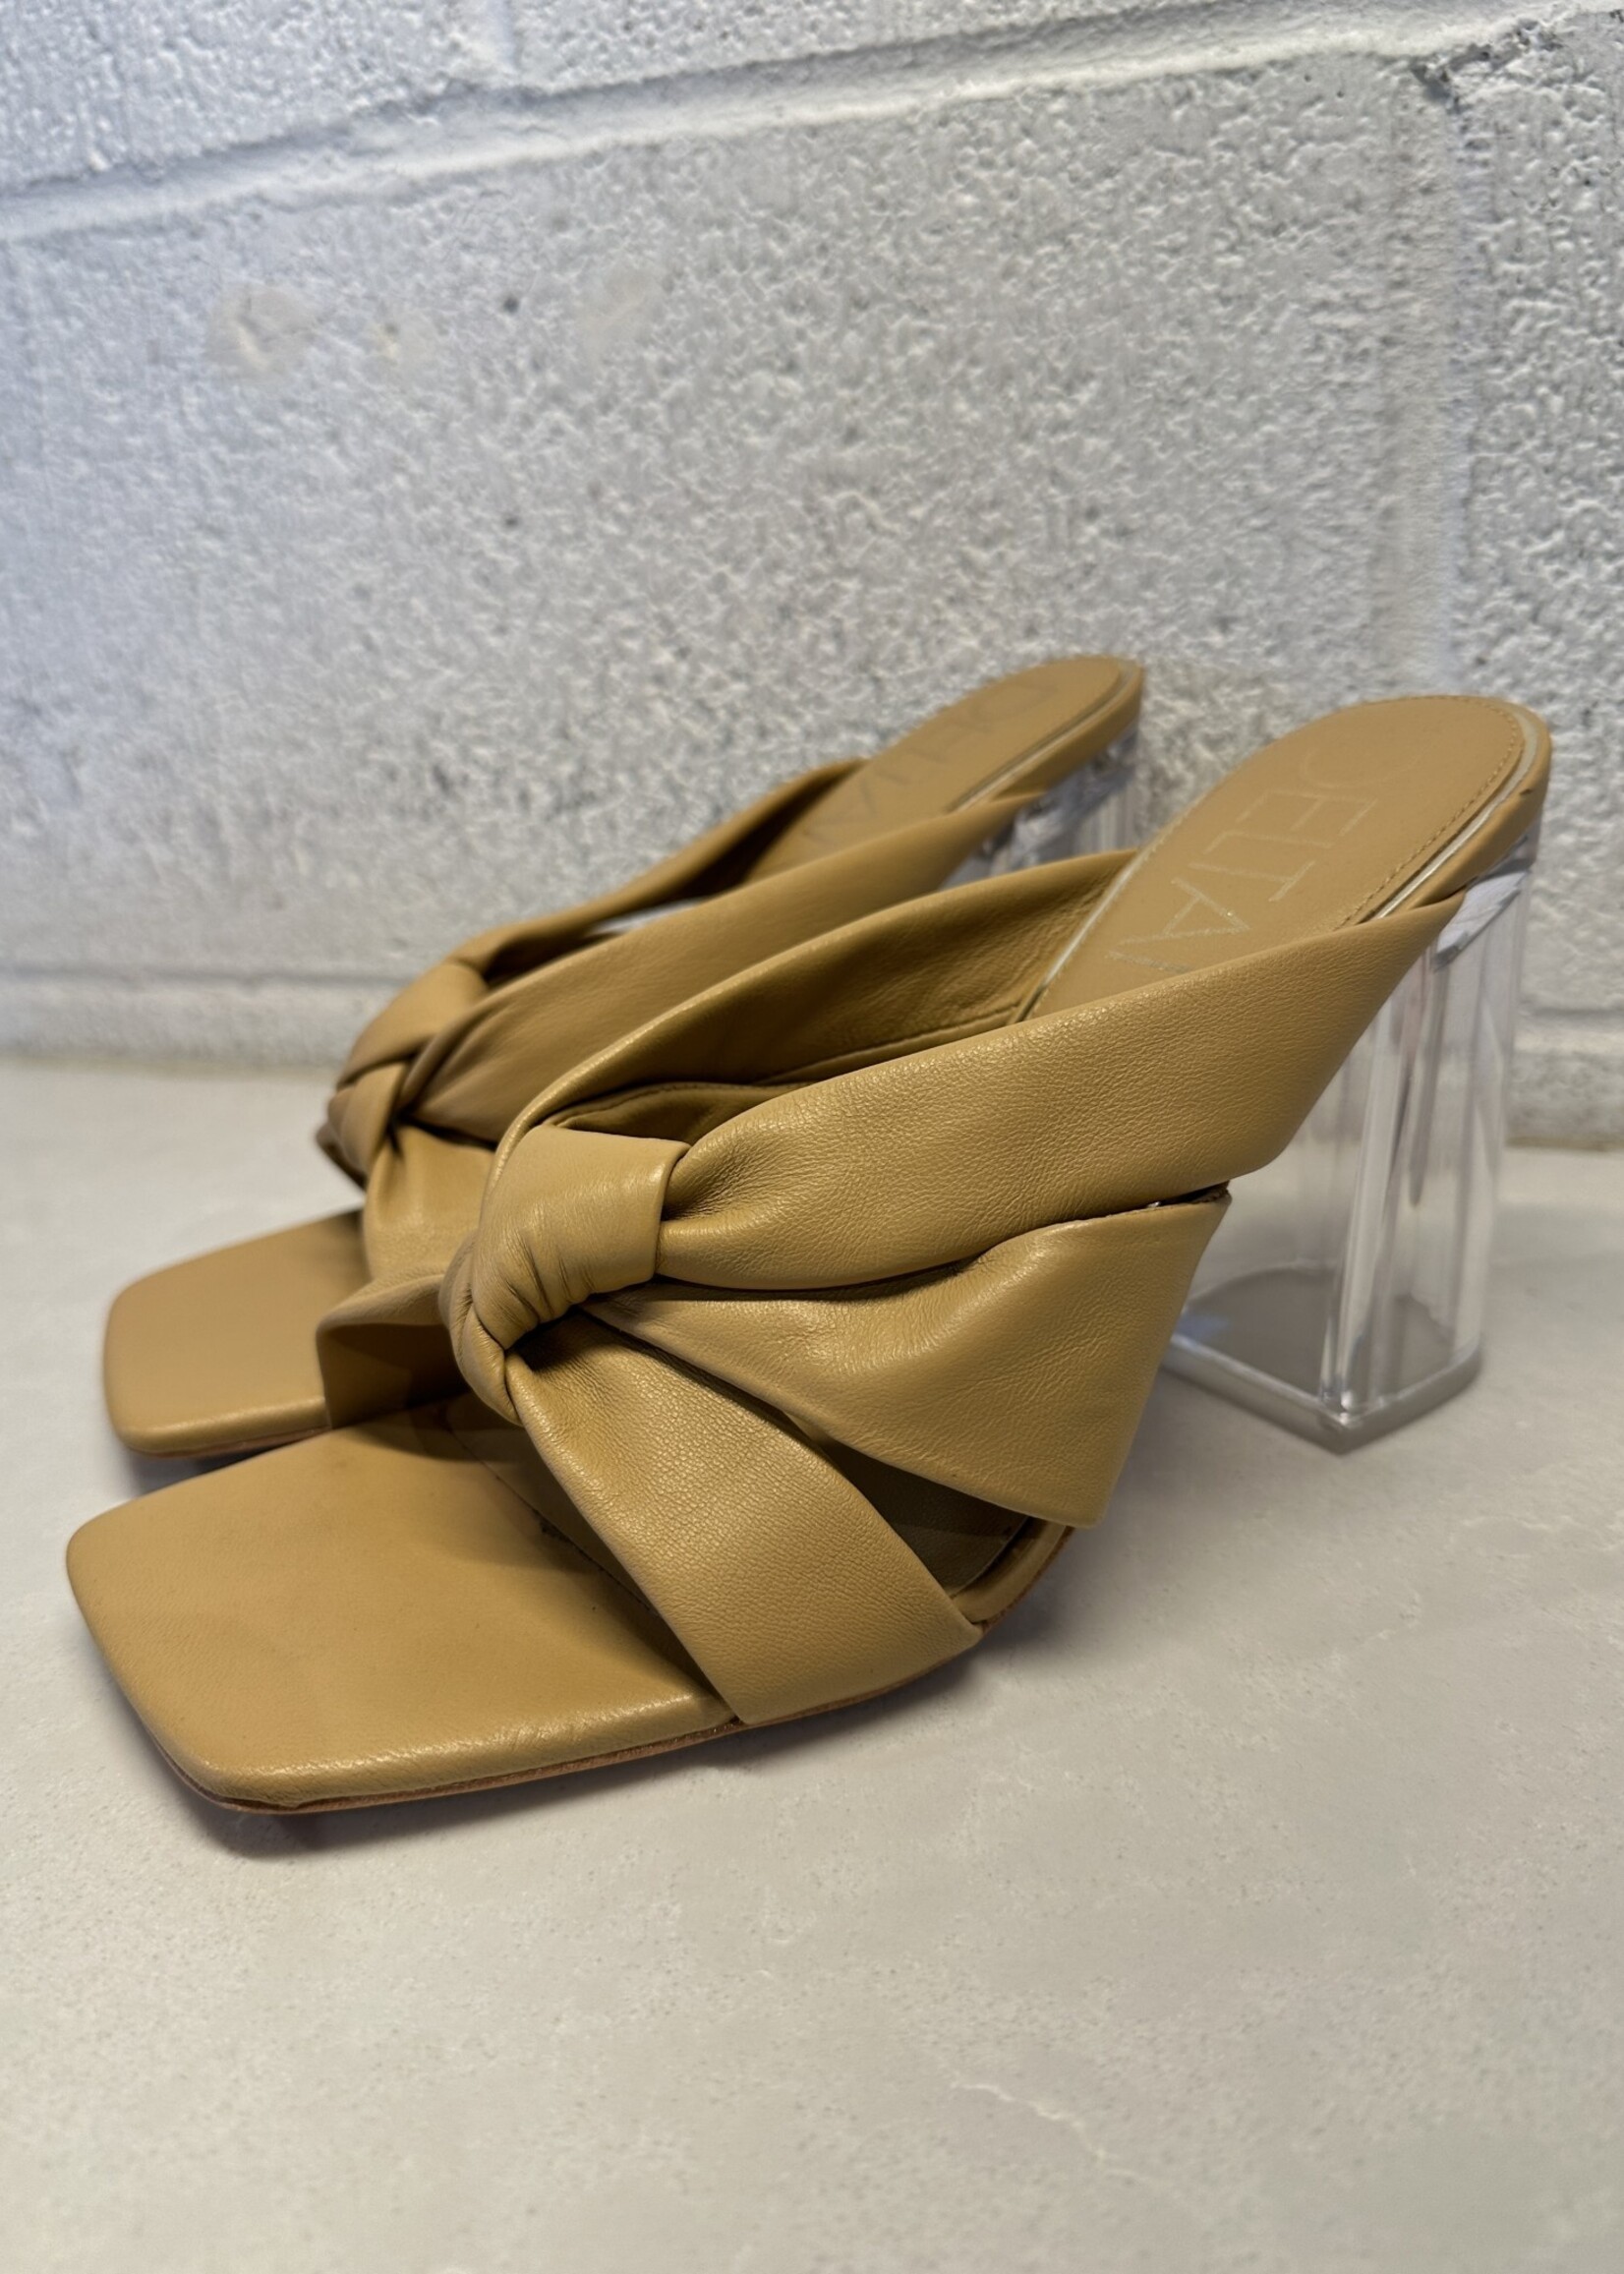 Deltan Tan Leather Block heels 9.5